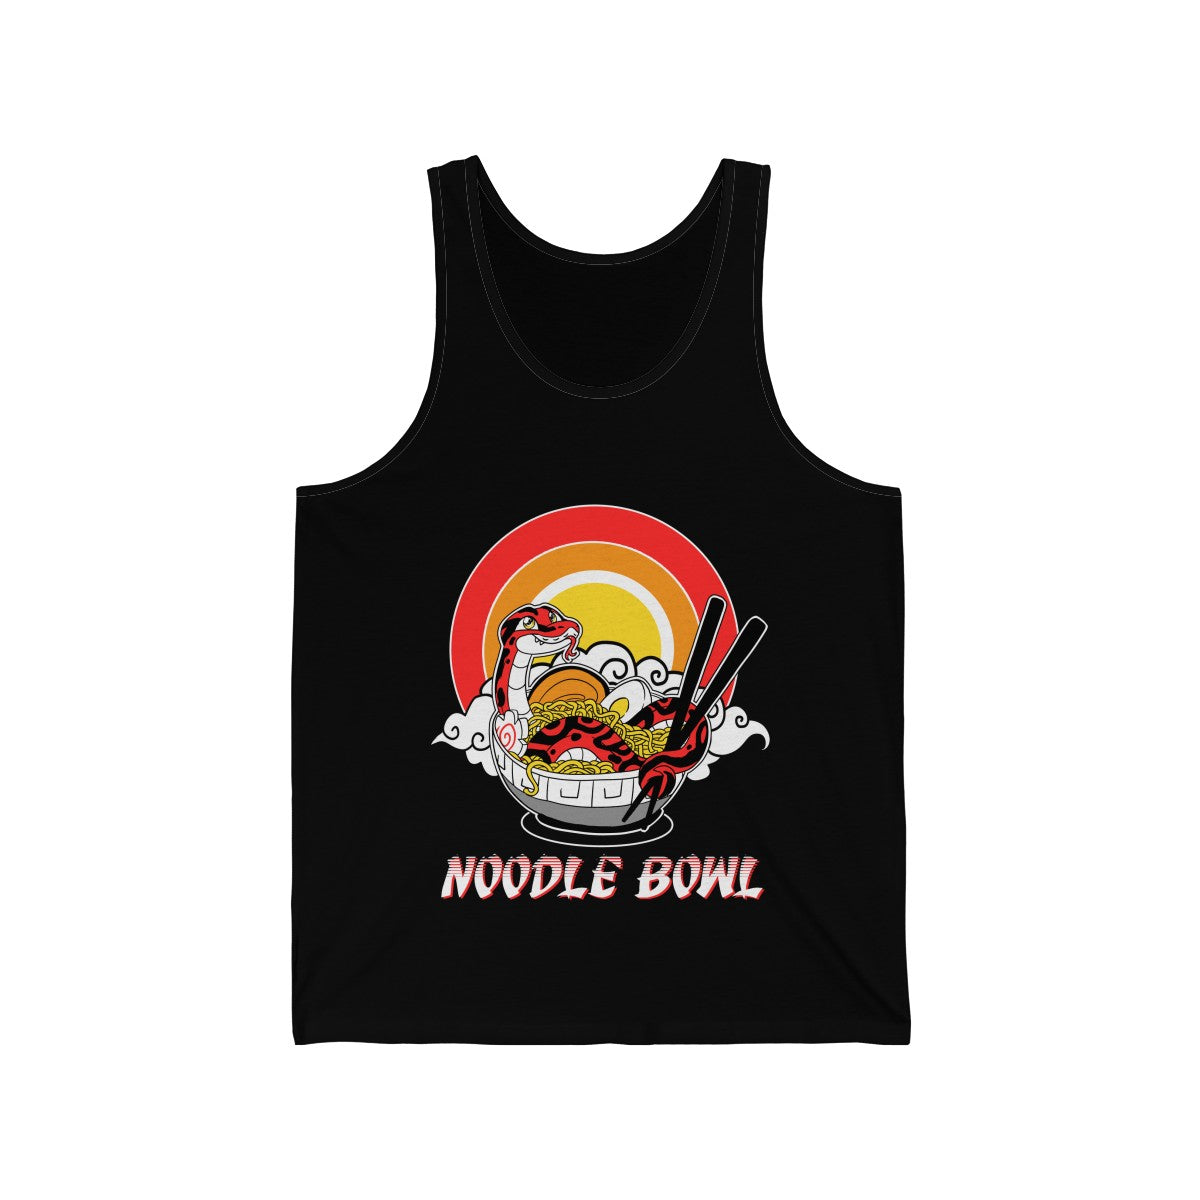 Noodle Bowl - Tank Top Tank Top Crunchy Crowe Black XS 